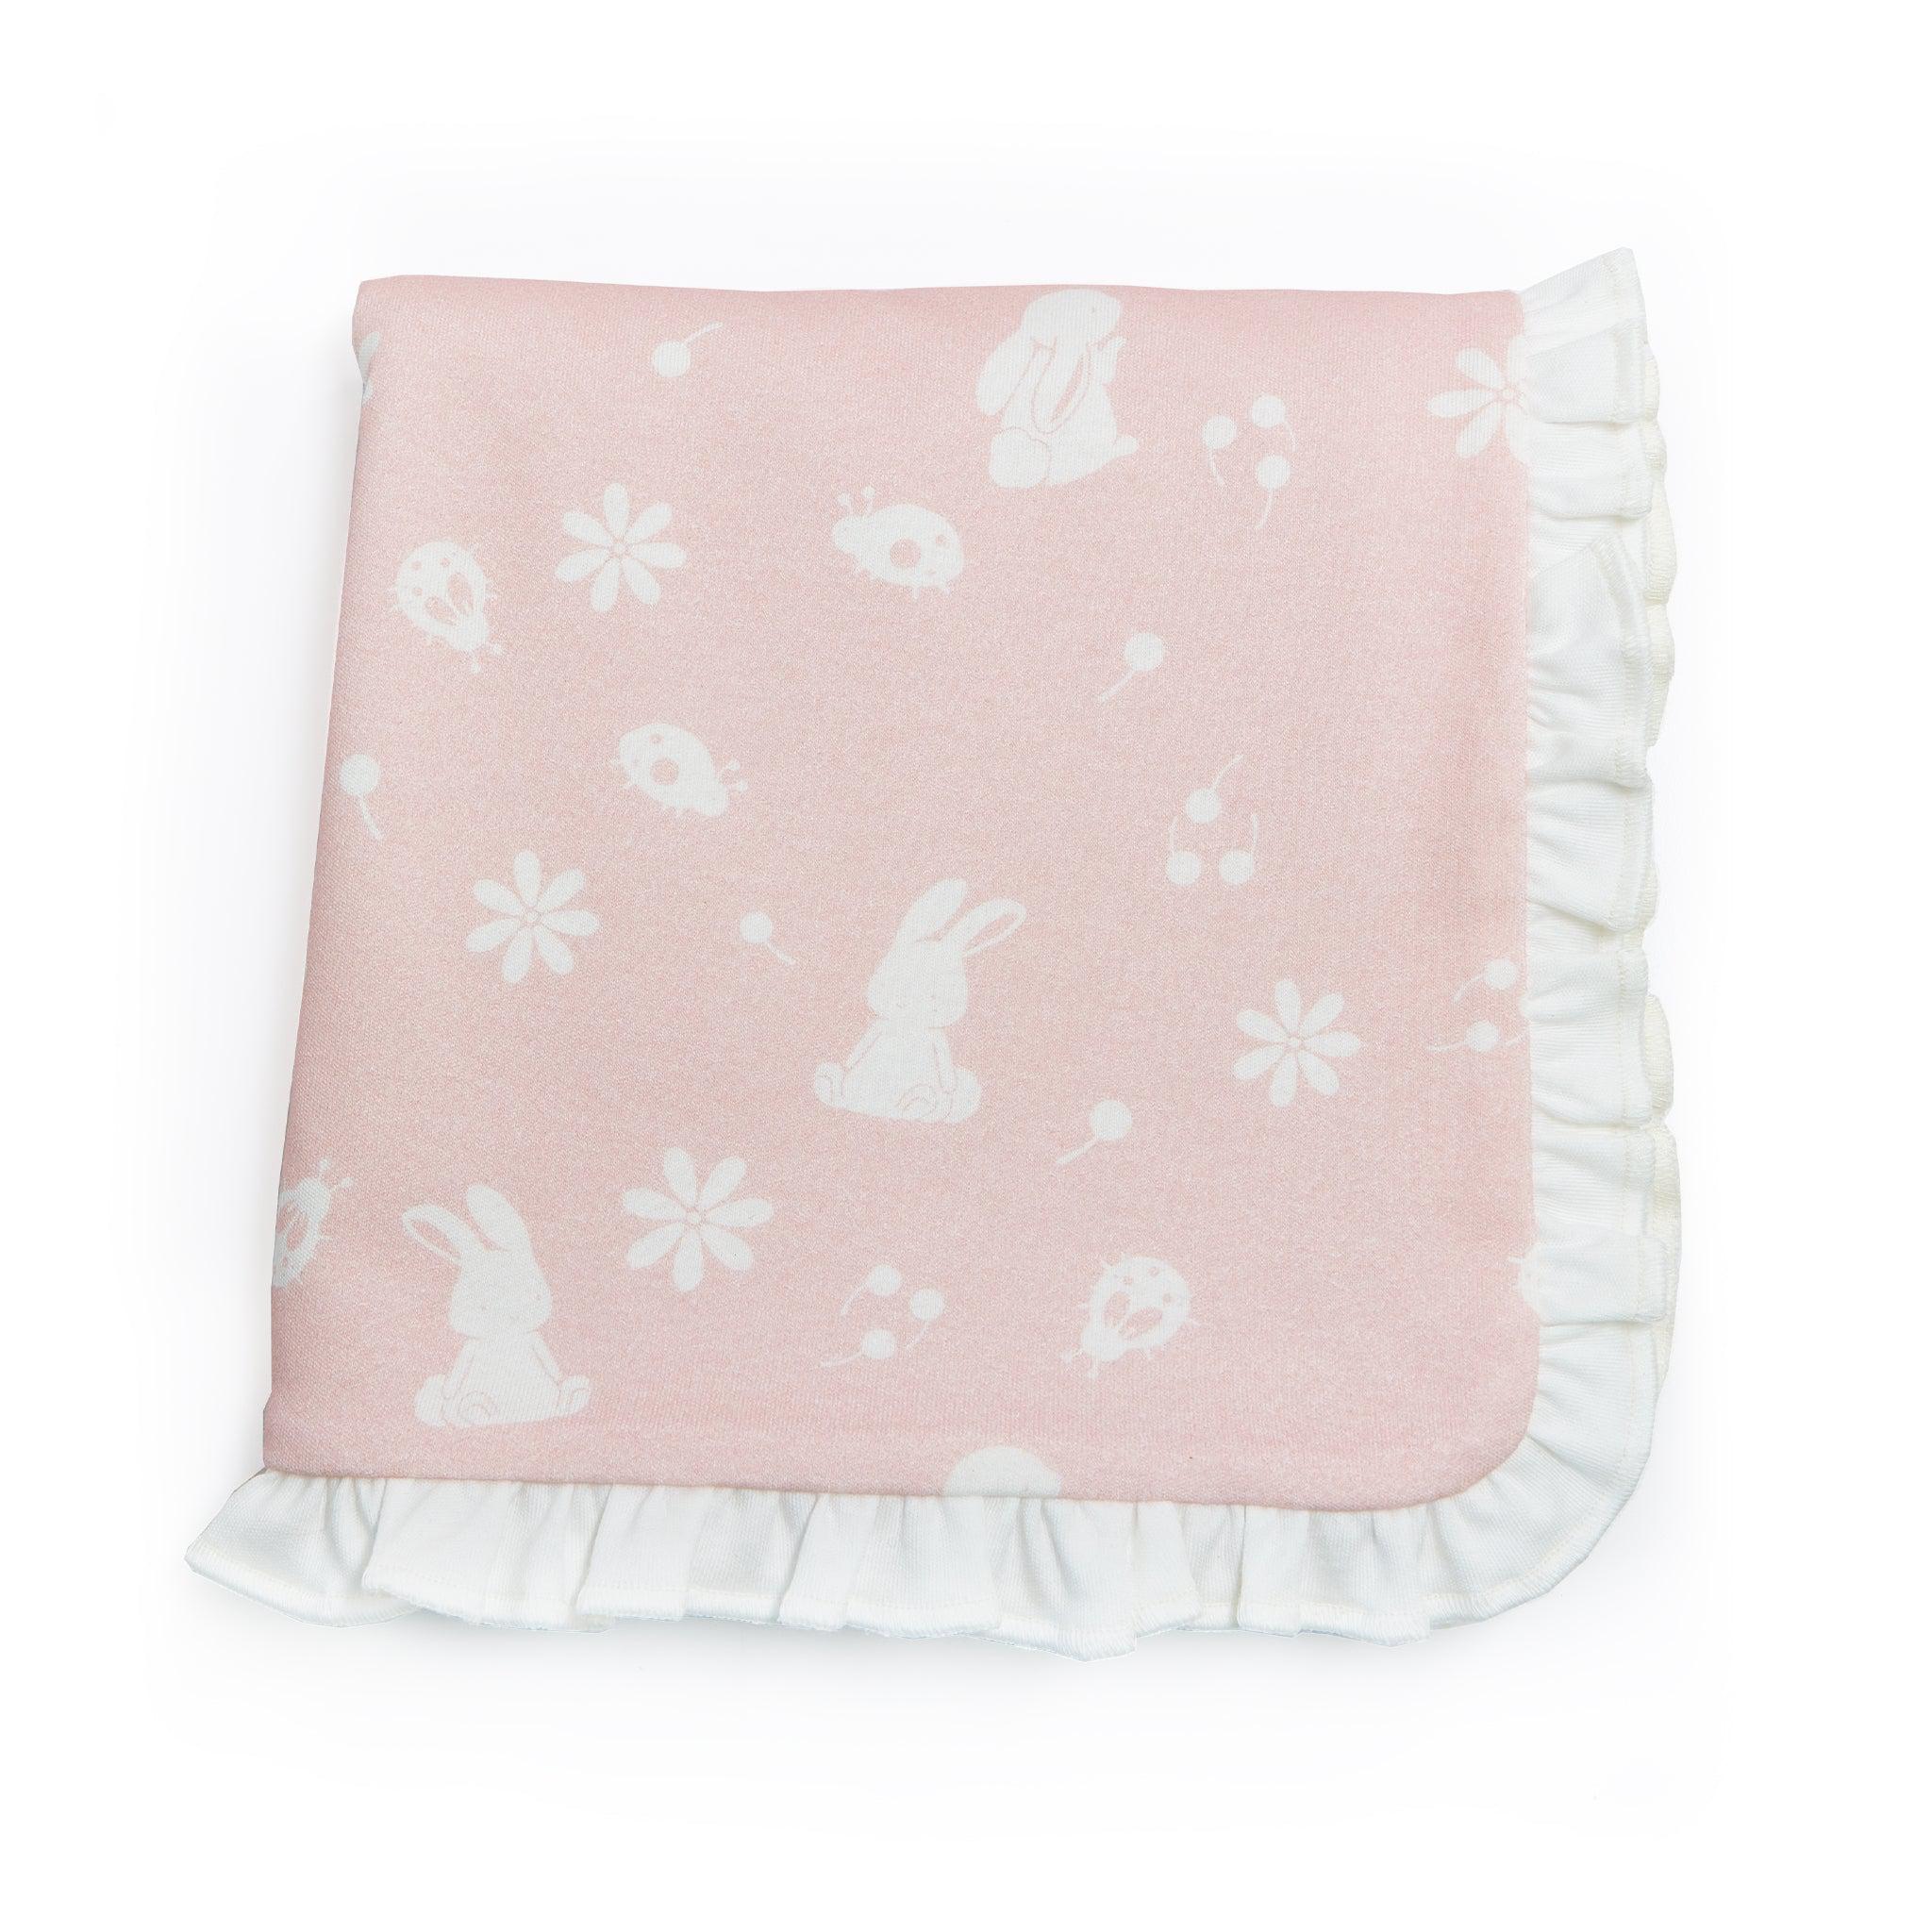 Blossom's Organic Receiving Blanket-Blossom Bunny-SKU: 104487 - Bunnies By The Bay